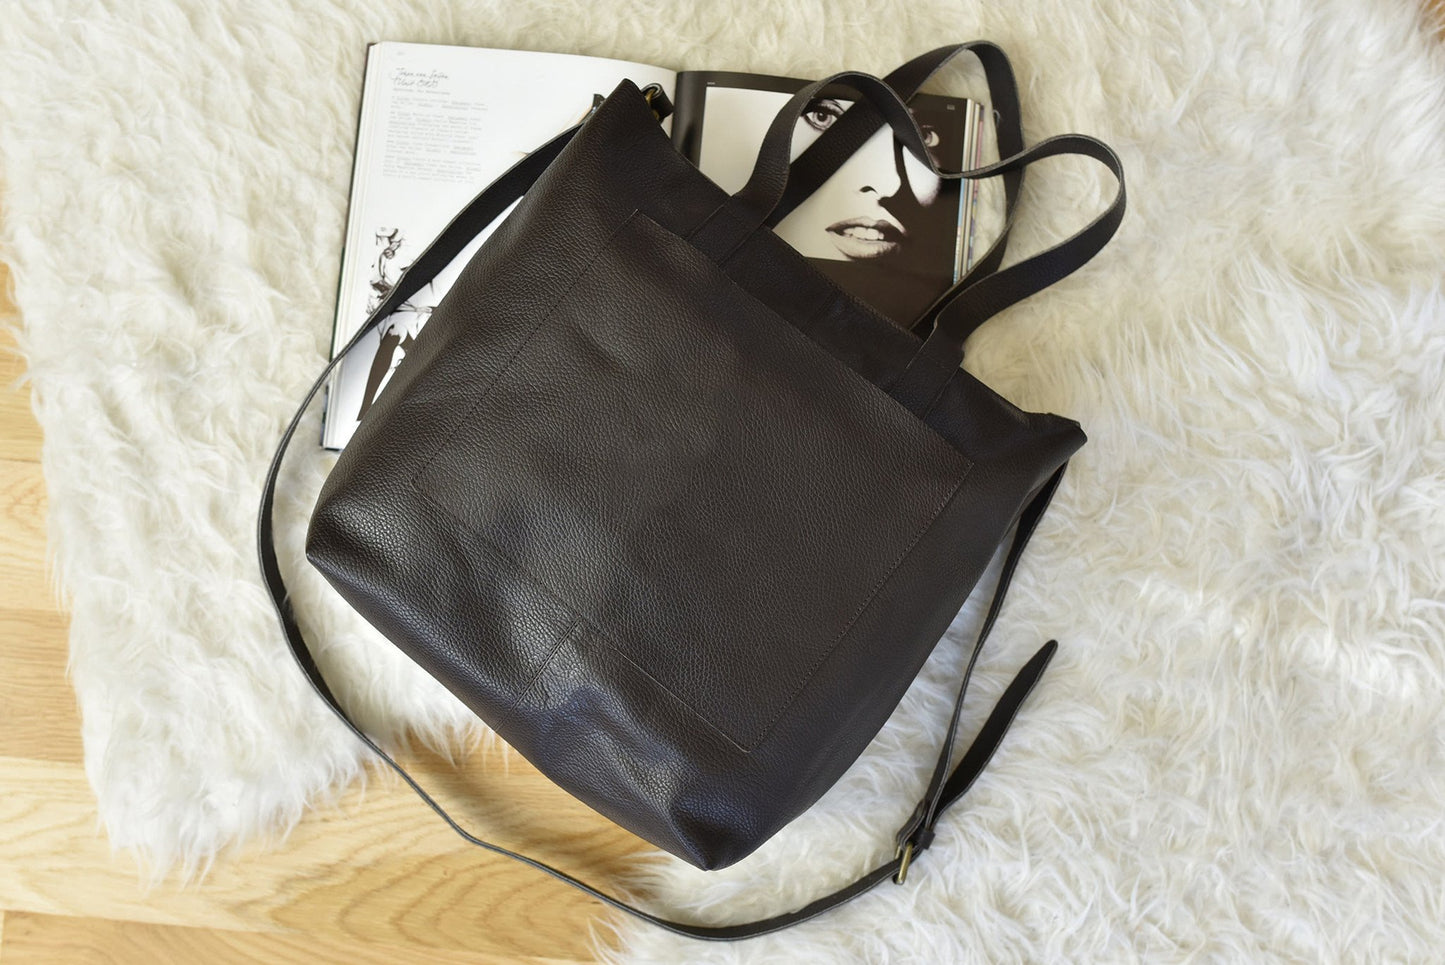 Designer Tote Bag in Cowhide Leather.